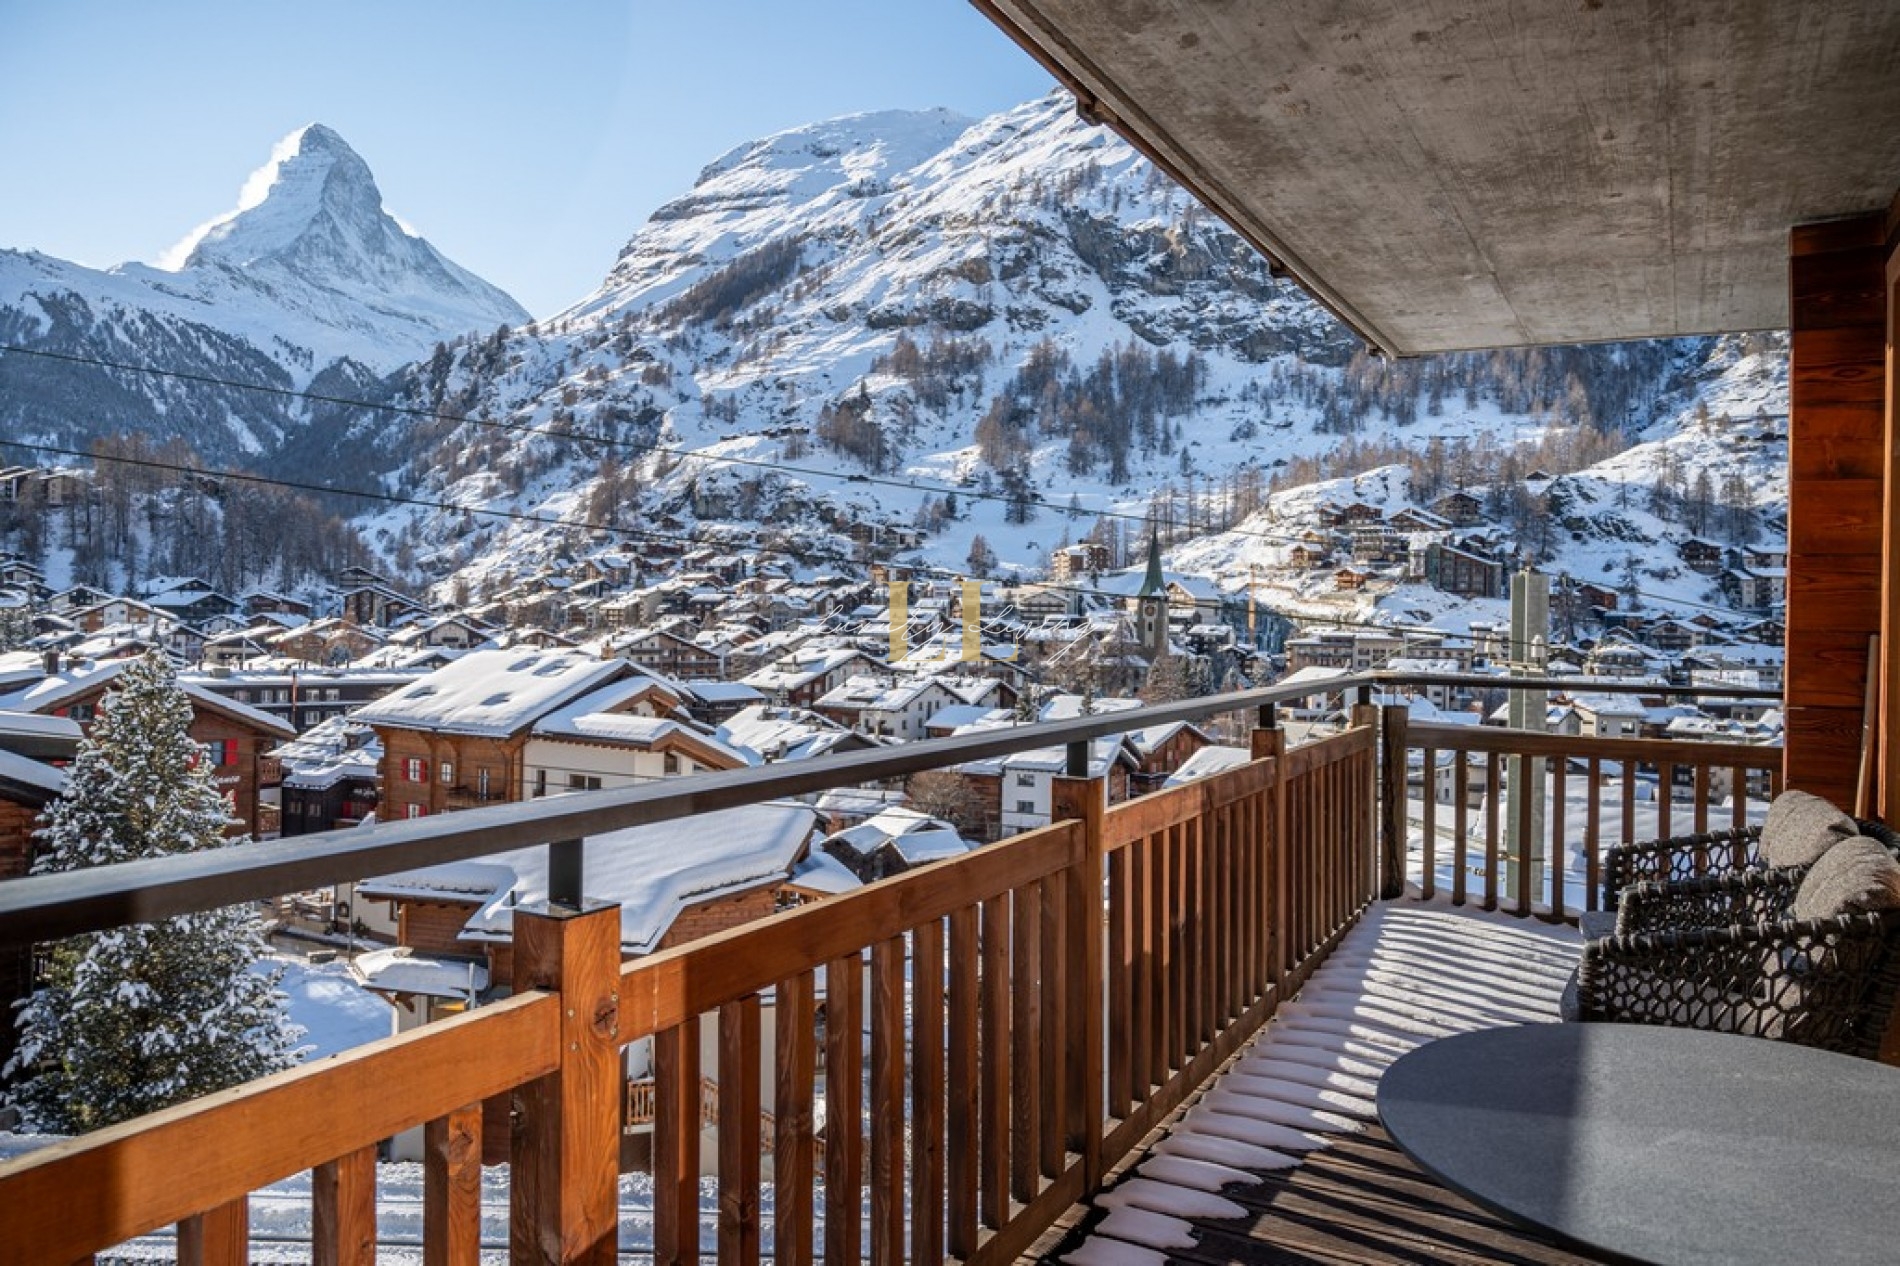 Zermatt accommodation chalets for rent in Zermatt apartments to rent in Zermatt holiday homes to rent in Zermatt